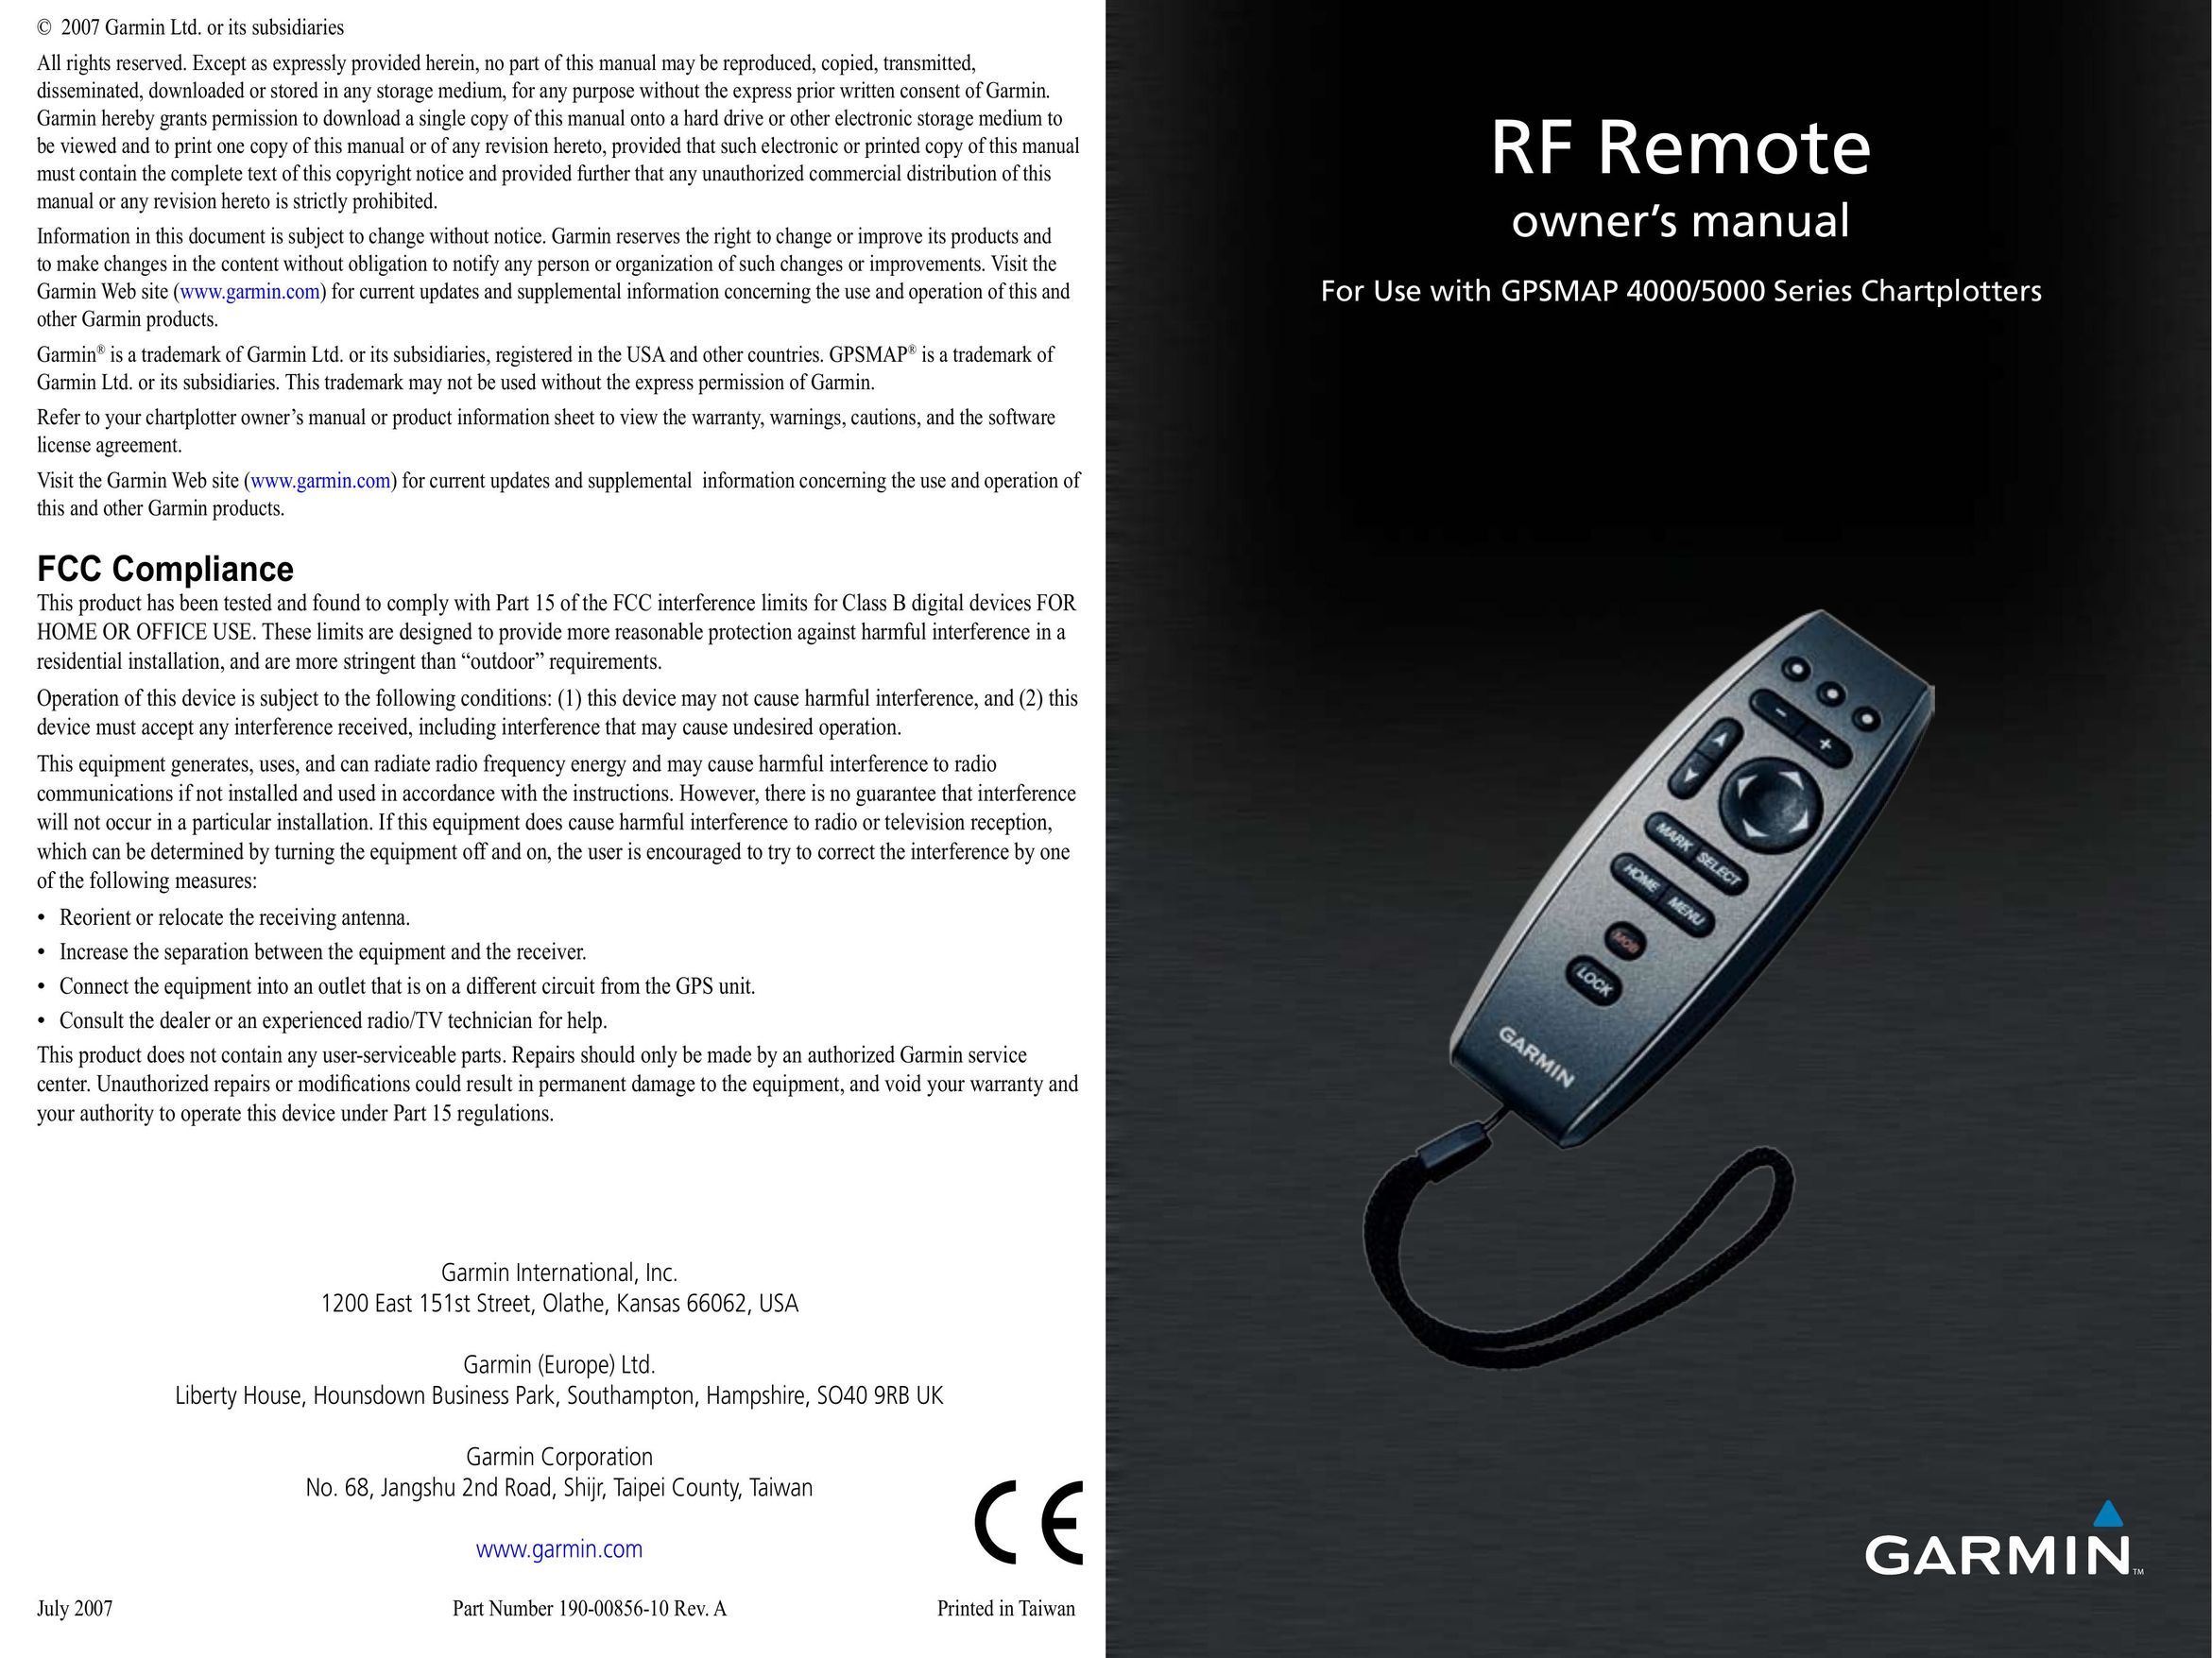 Garmin 5000 Universal Remote User Manual